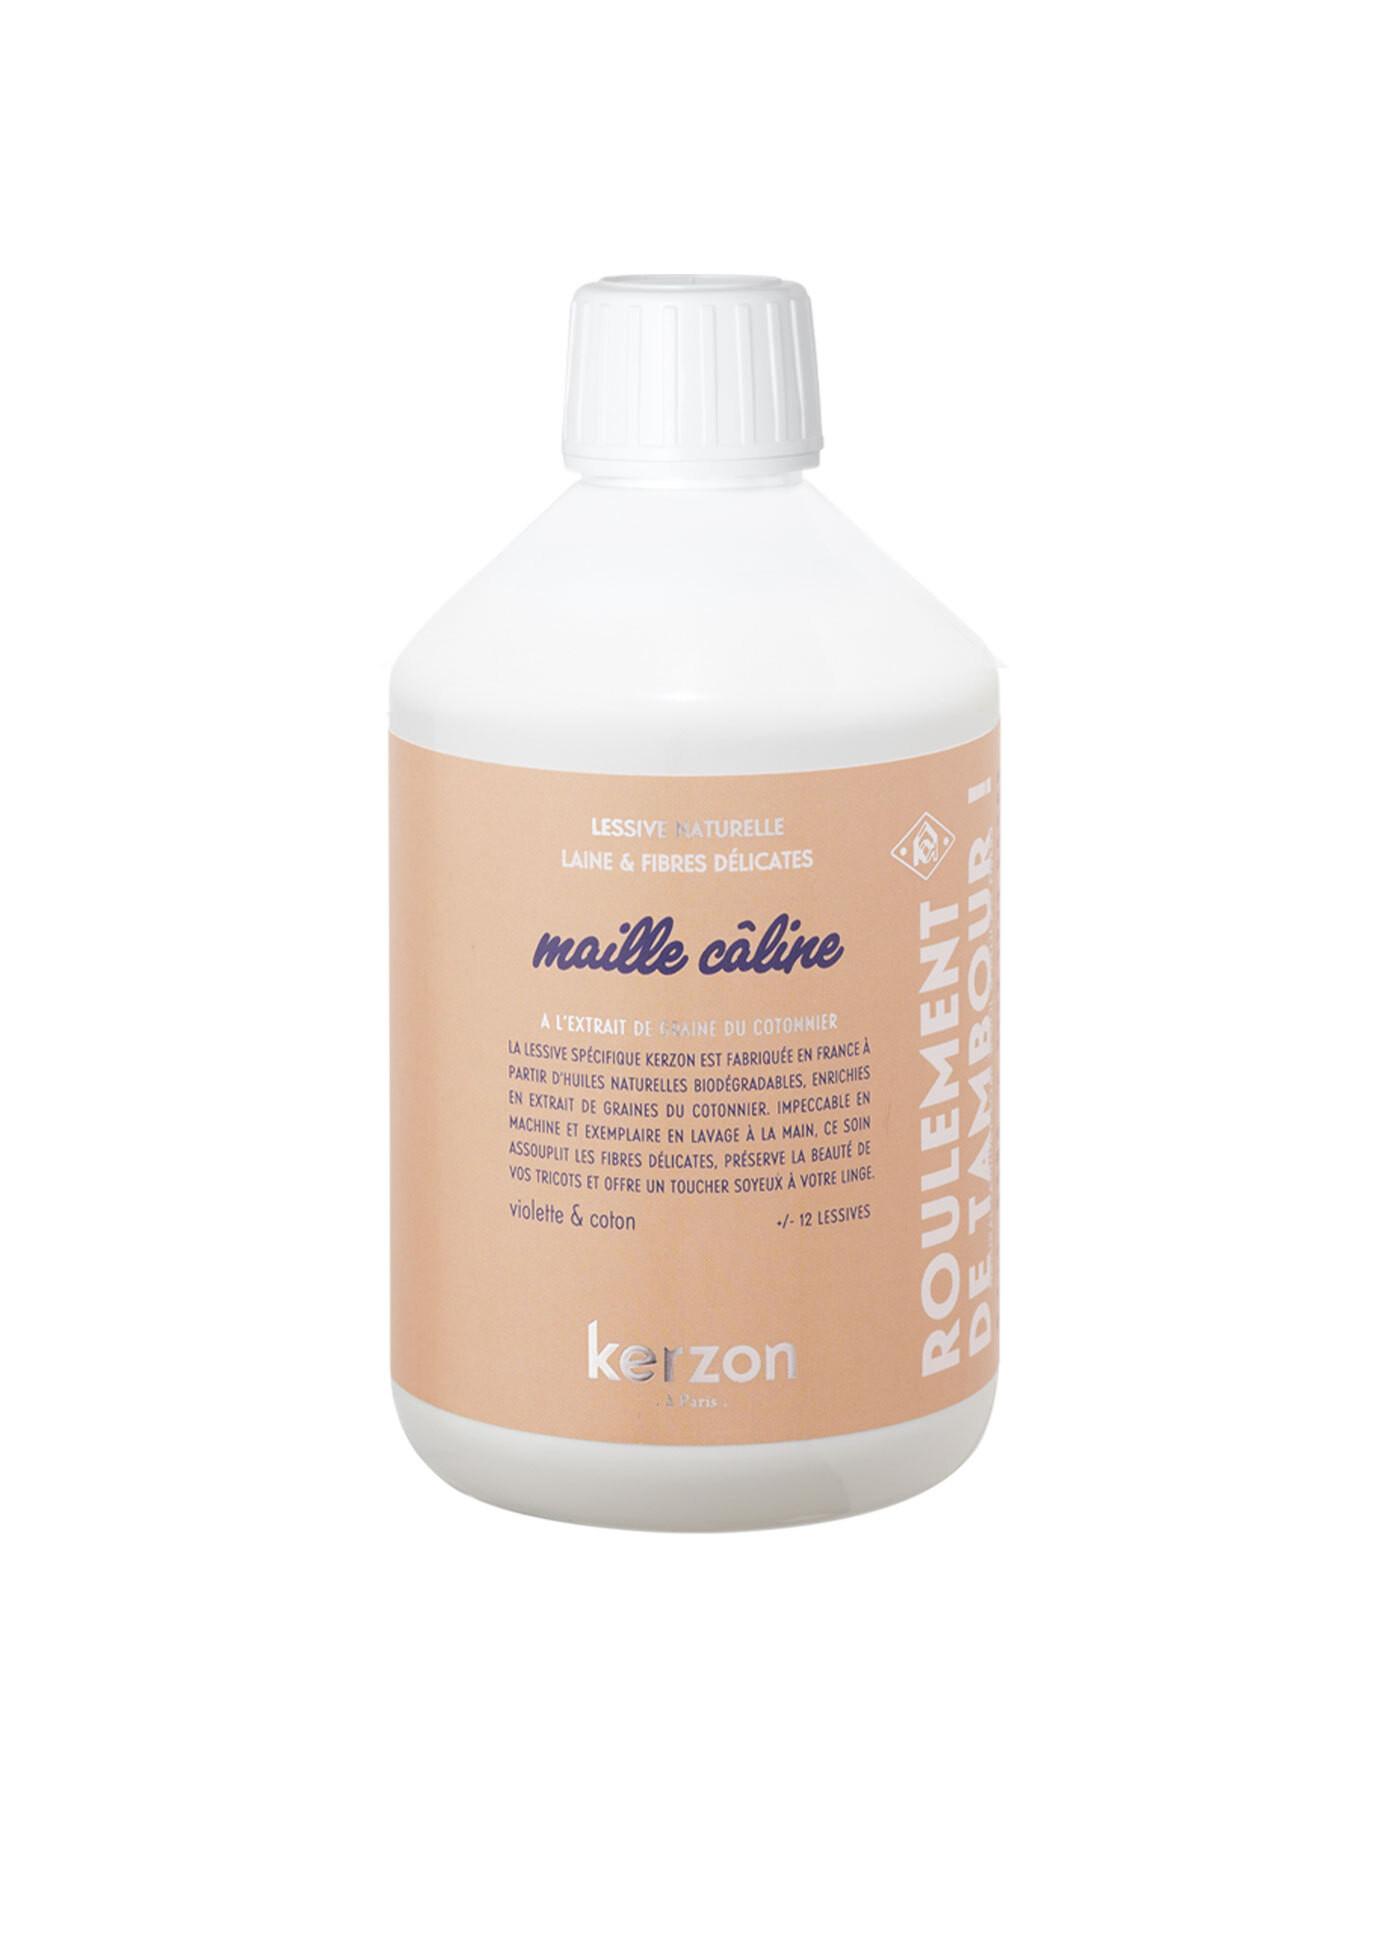  Lessive Fragranced Laundry Soap - Maille Câline, Wool & Delicate Fibers  